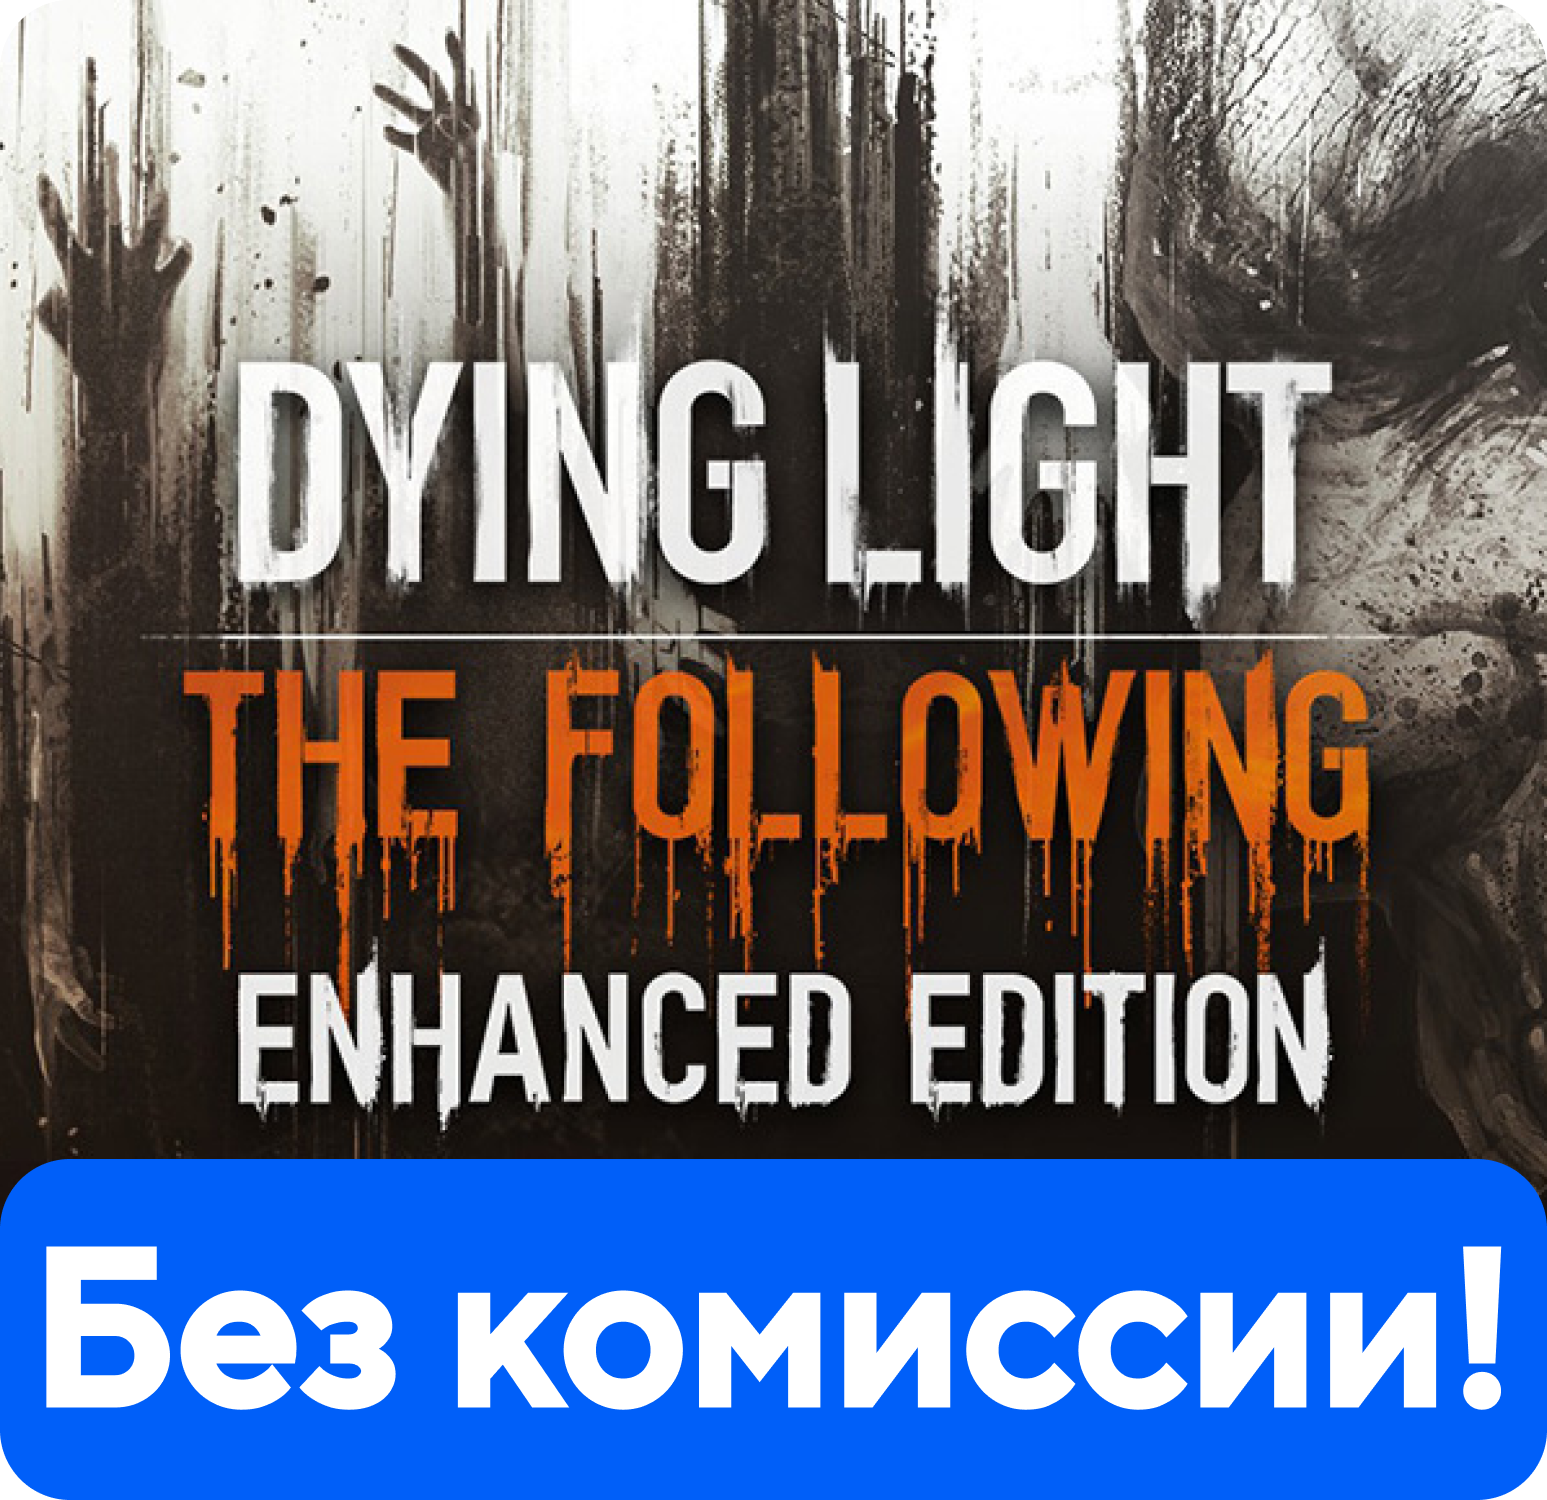 DYING LIGHT ENHANCED EDITION 💳✅БЕЗ КОМИССИИ + БОНУС